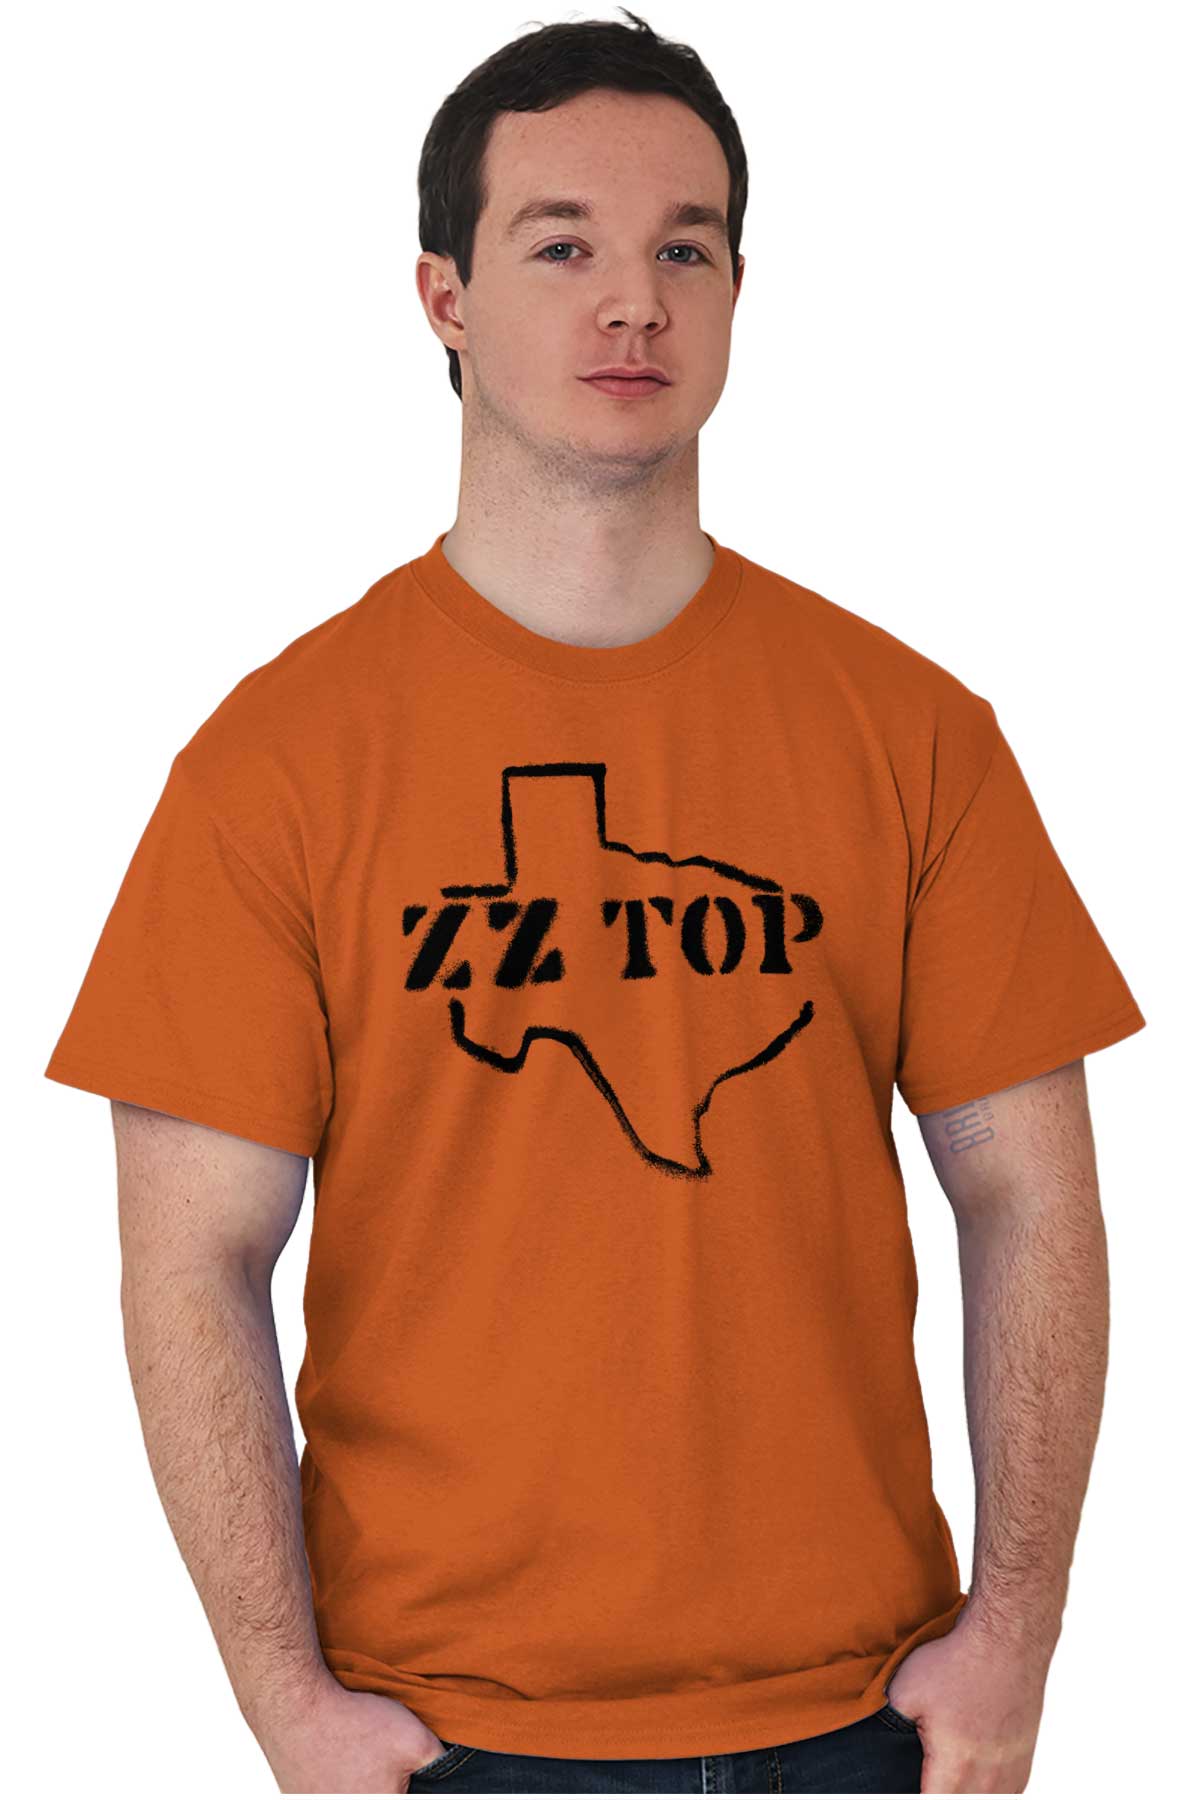 ZZ Top Official Concert Merch 80s Men's Graphic T Shirt Tees Brisco Brands 3X - image 1 of 6